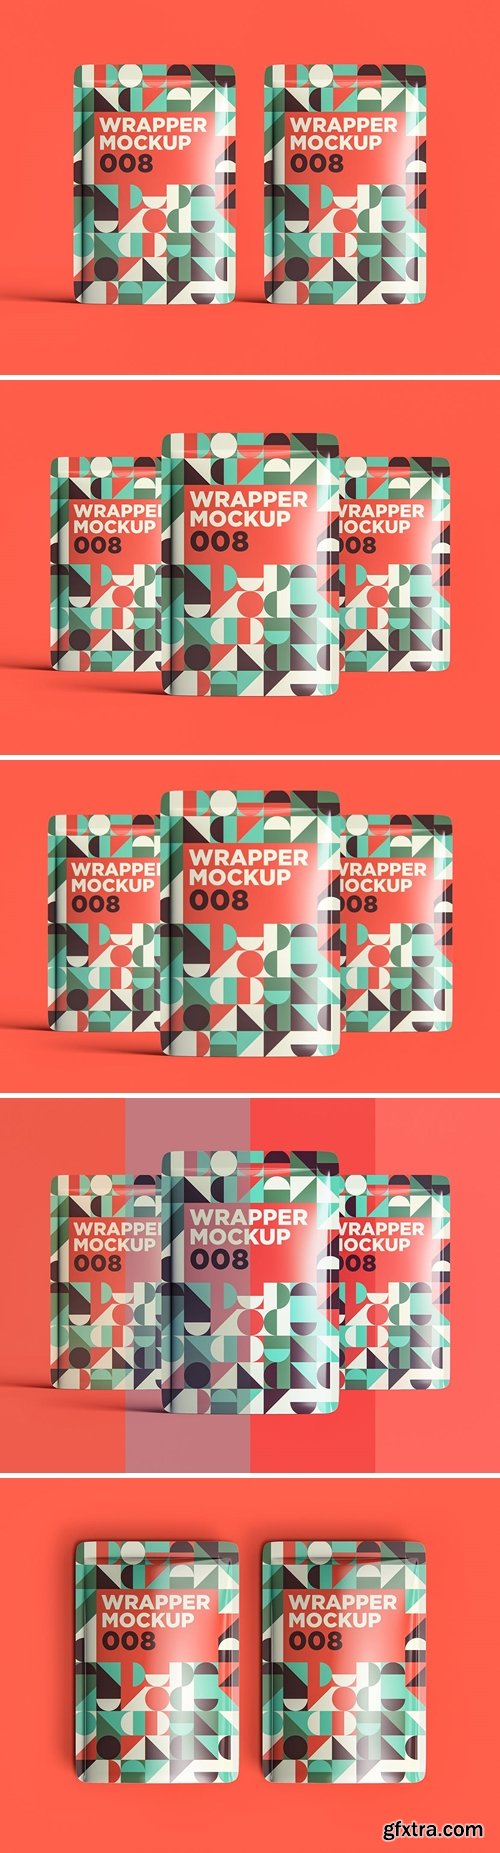 Wrapper Mockup 008